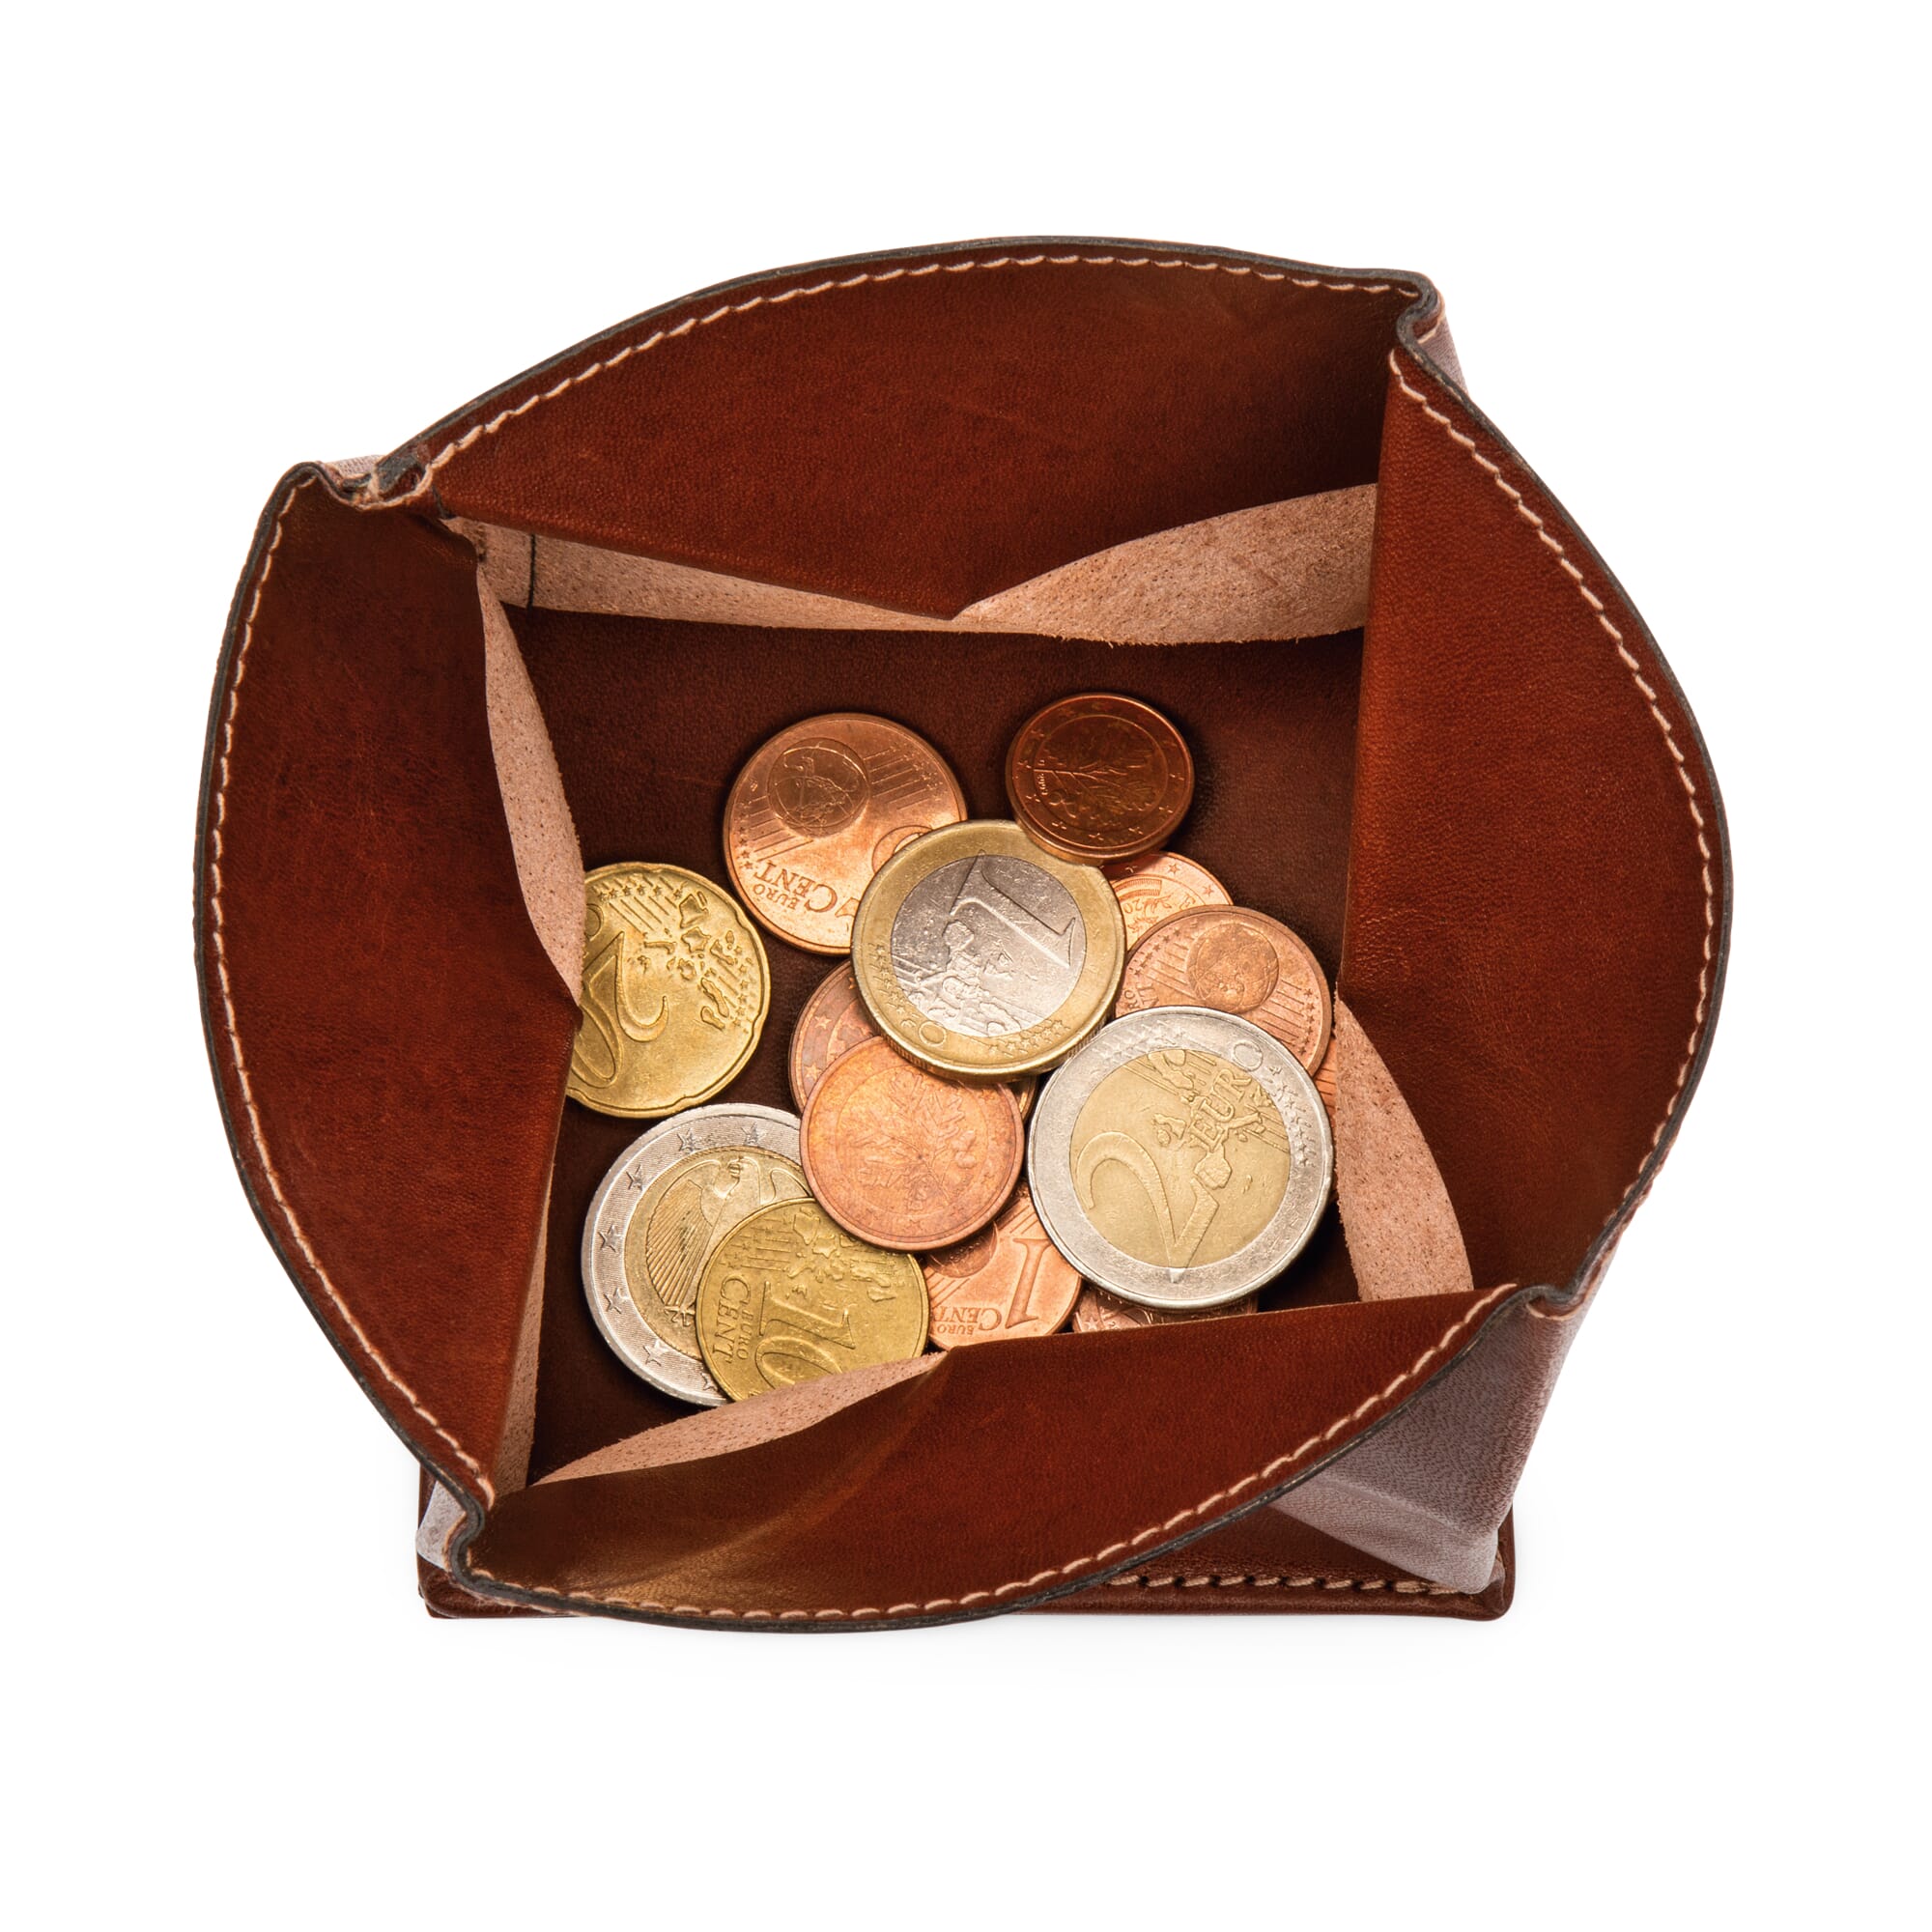 UK Women Girls Short Small Wallet Leather Folding Coin Card Holder Money  Purse | eBay